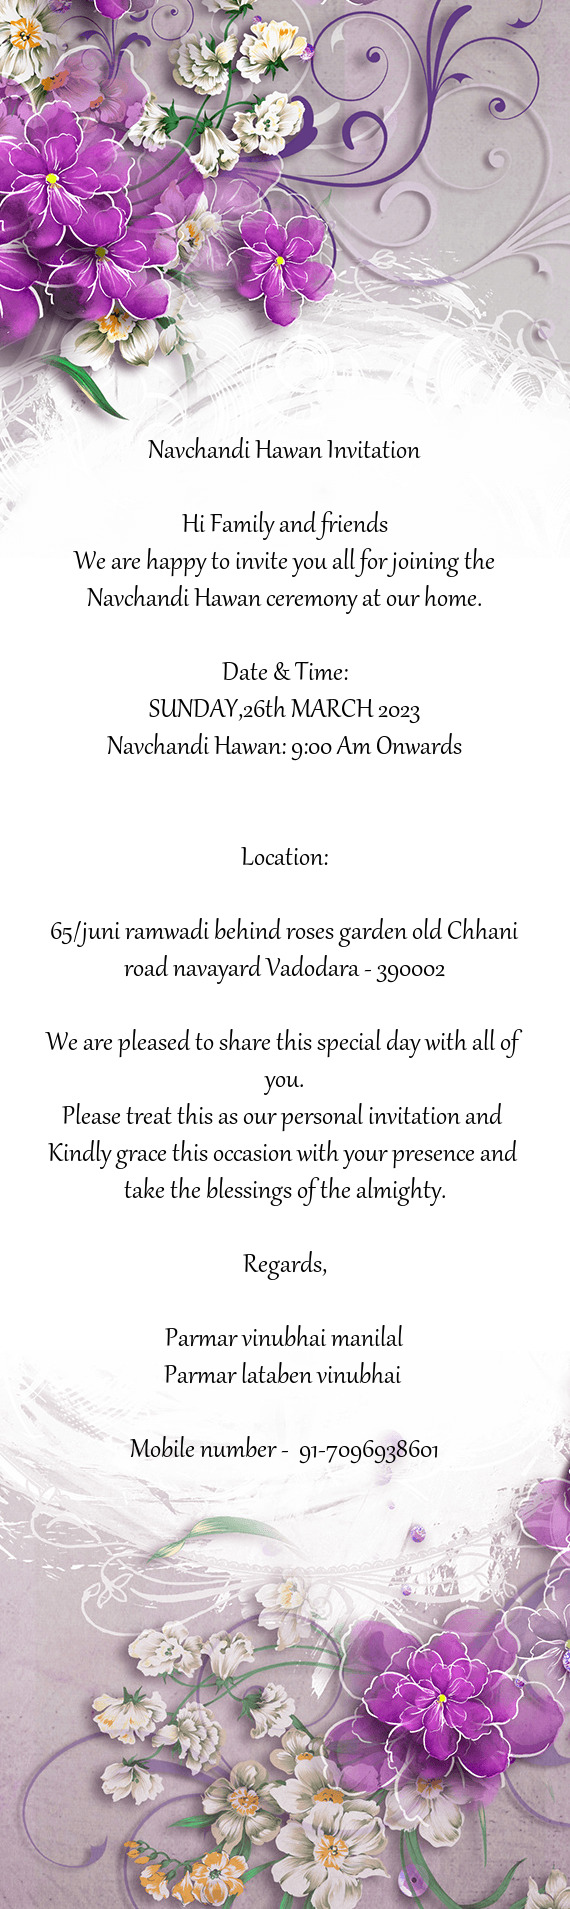 Navchandi Hawan Invitation